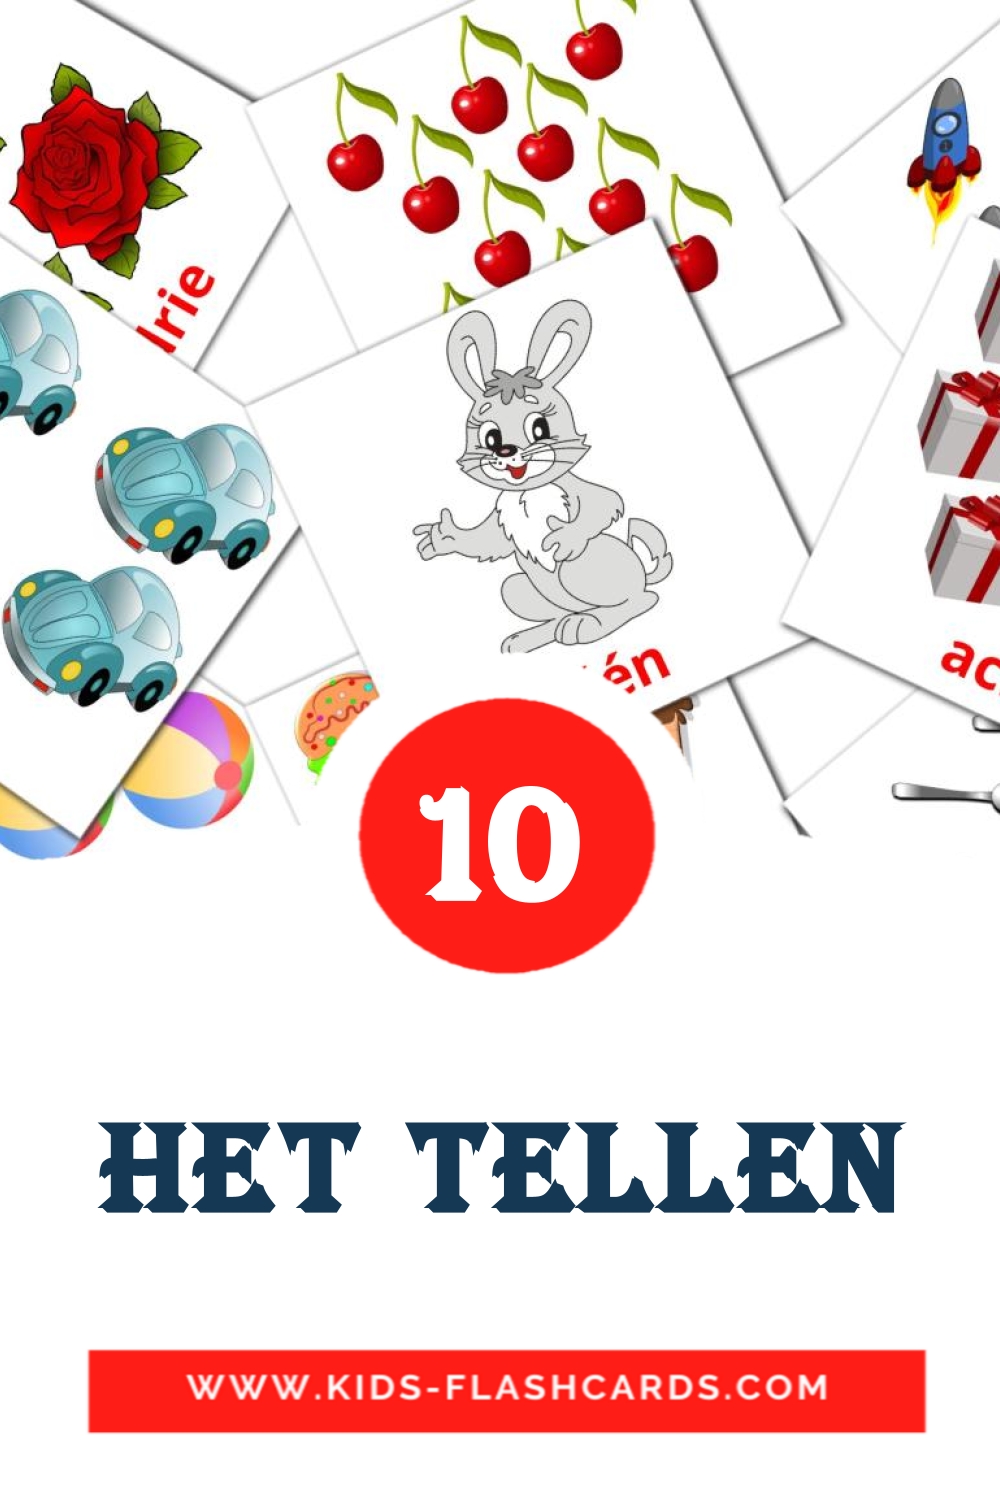 10 carte illustrate di Het tellen per la scuola materna in olandese